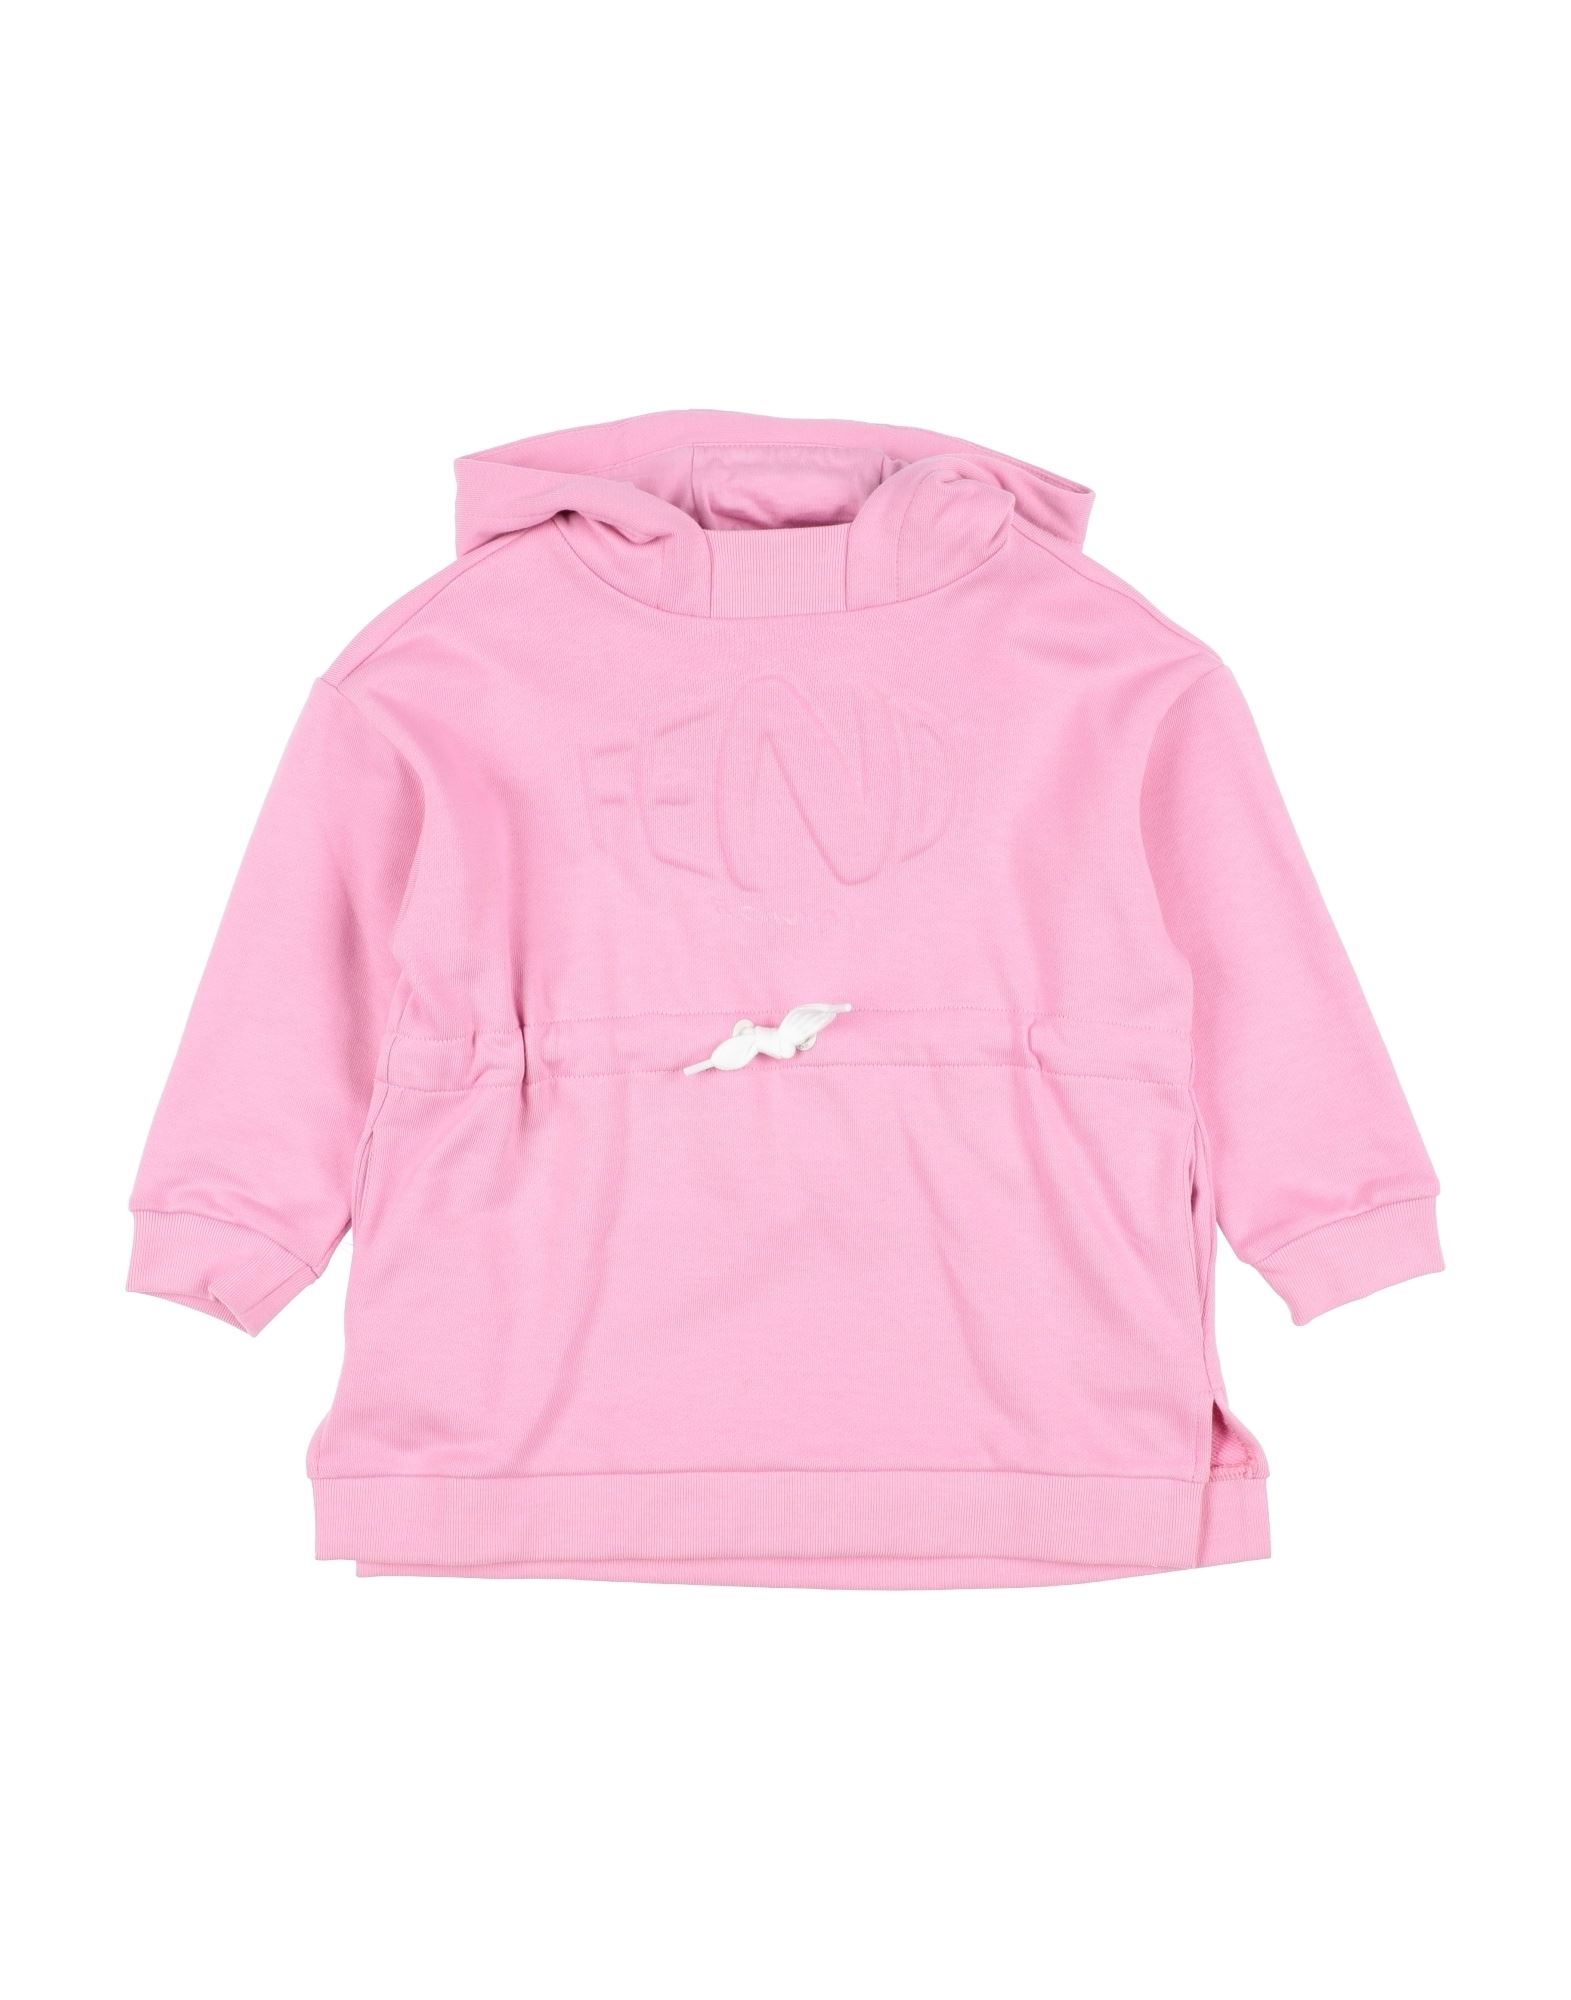 Fendi Kids' Sweatshirts In Pink